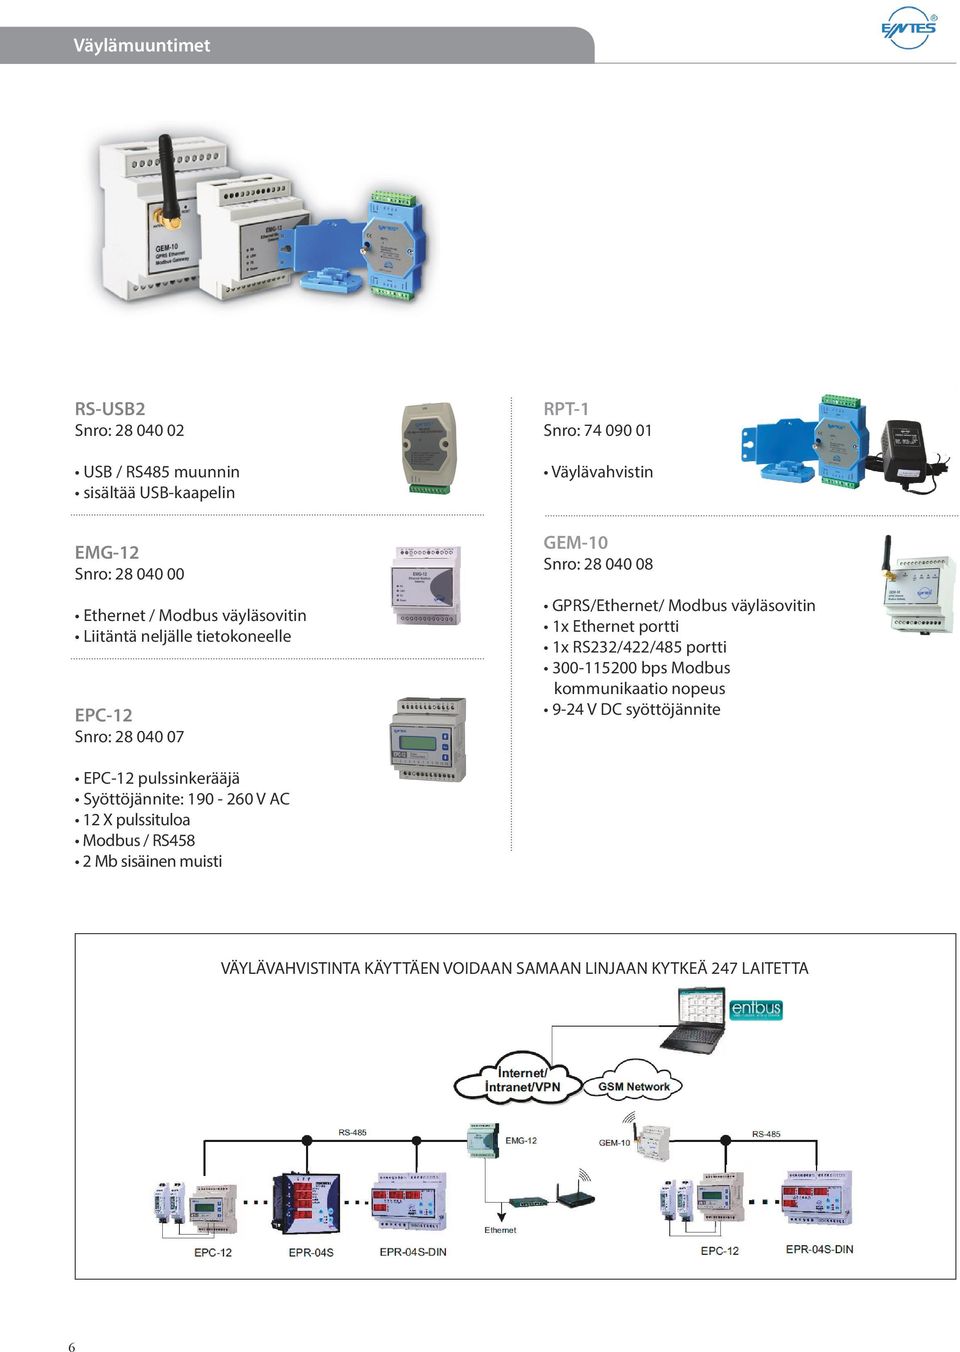 väyläsovitin 1x Ethernet portti 1x RS232/422/485 portti 300-115200 bps Modbus kommunikaatio nopeus 9-24 V DC syöttöjännite EPC-12